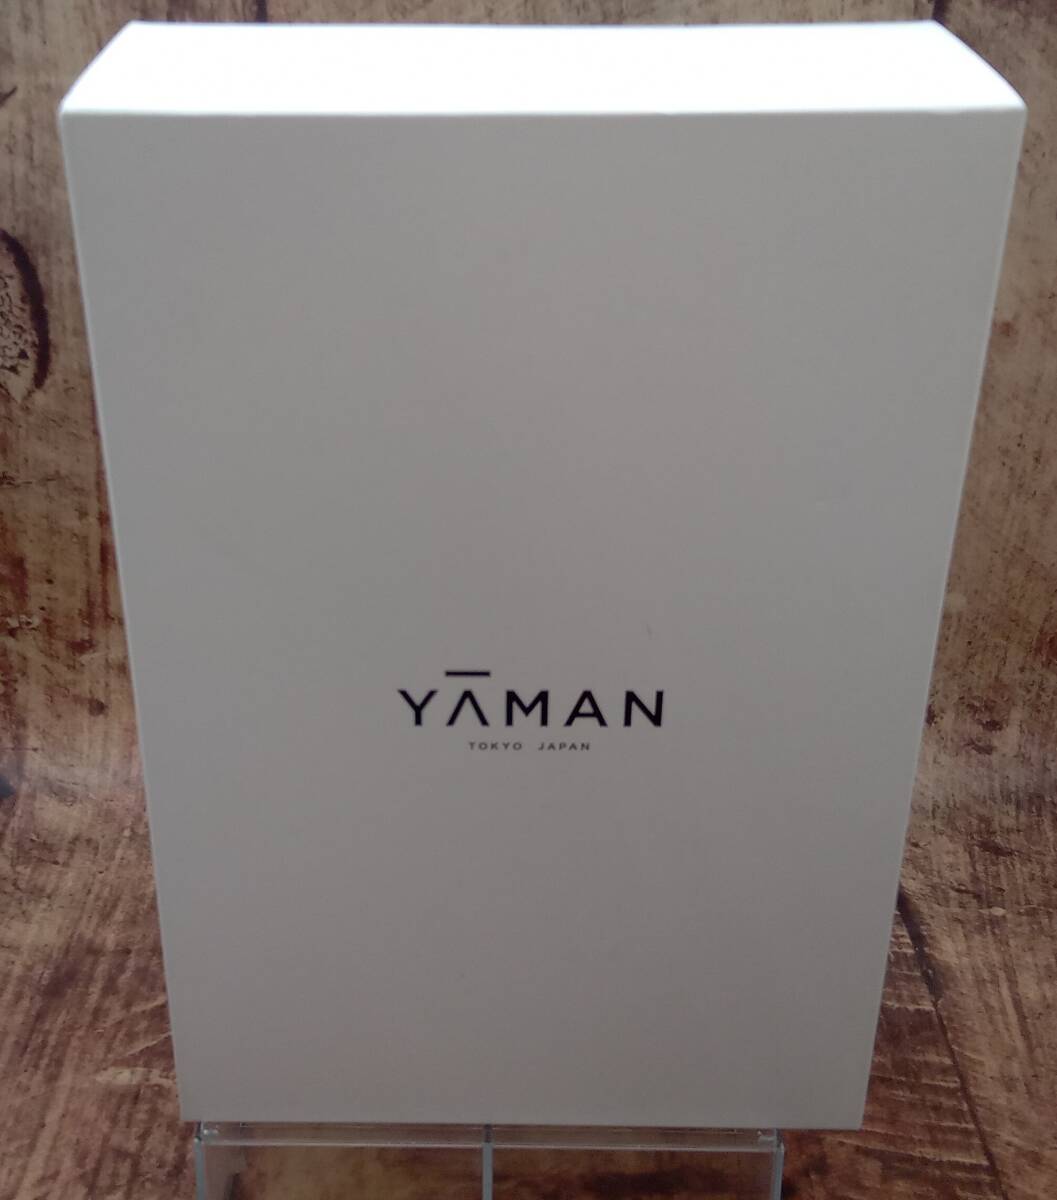 YAMBN ヤーマン /キャビスパ 360 / HDS-100B /美容機器/箱・説明書有り/★充電ケーブル欠品/減額済